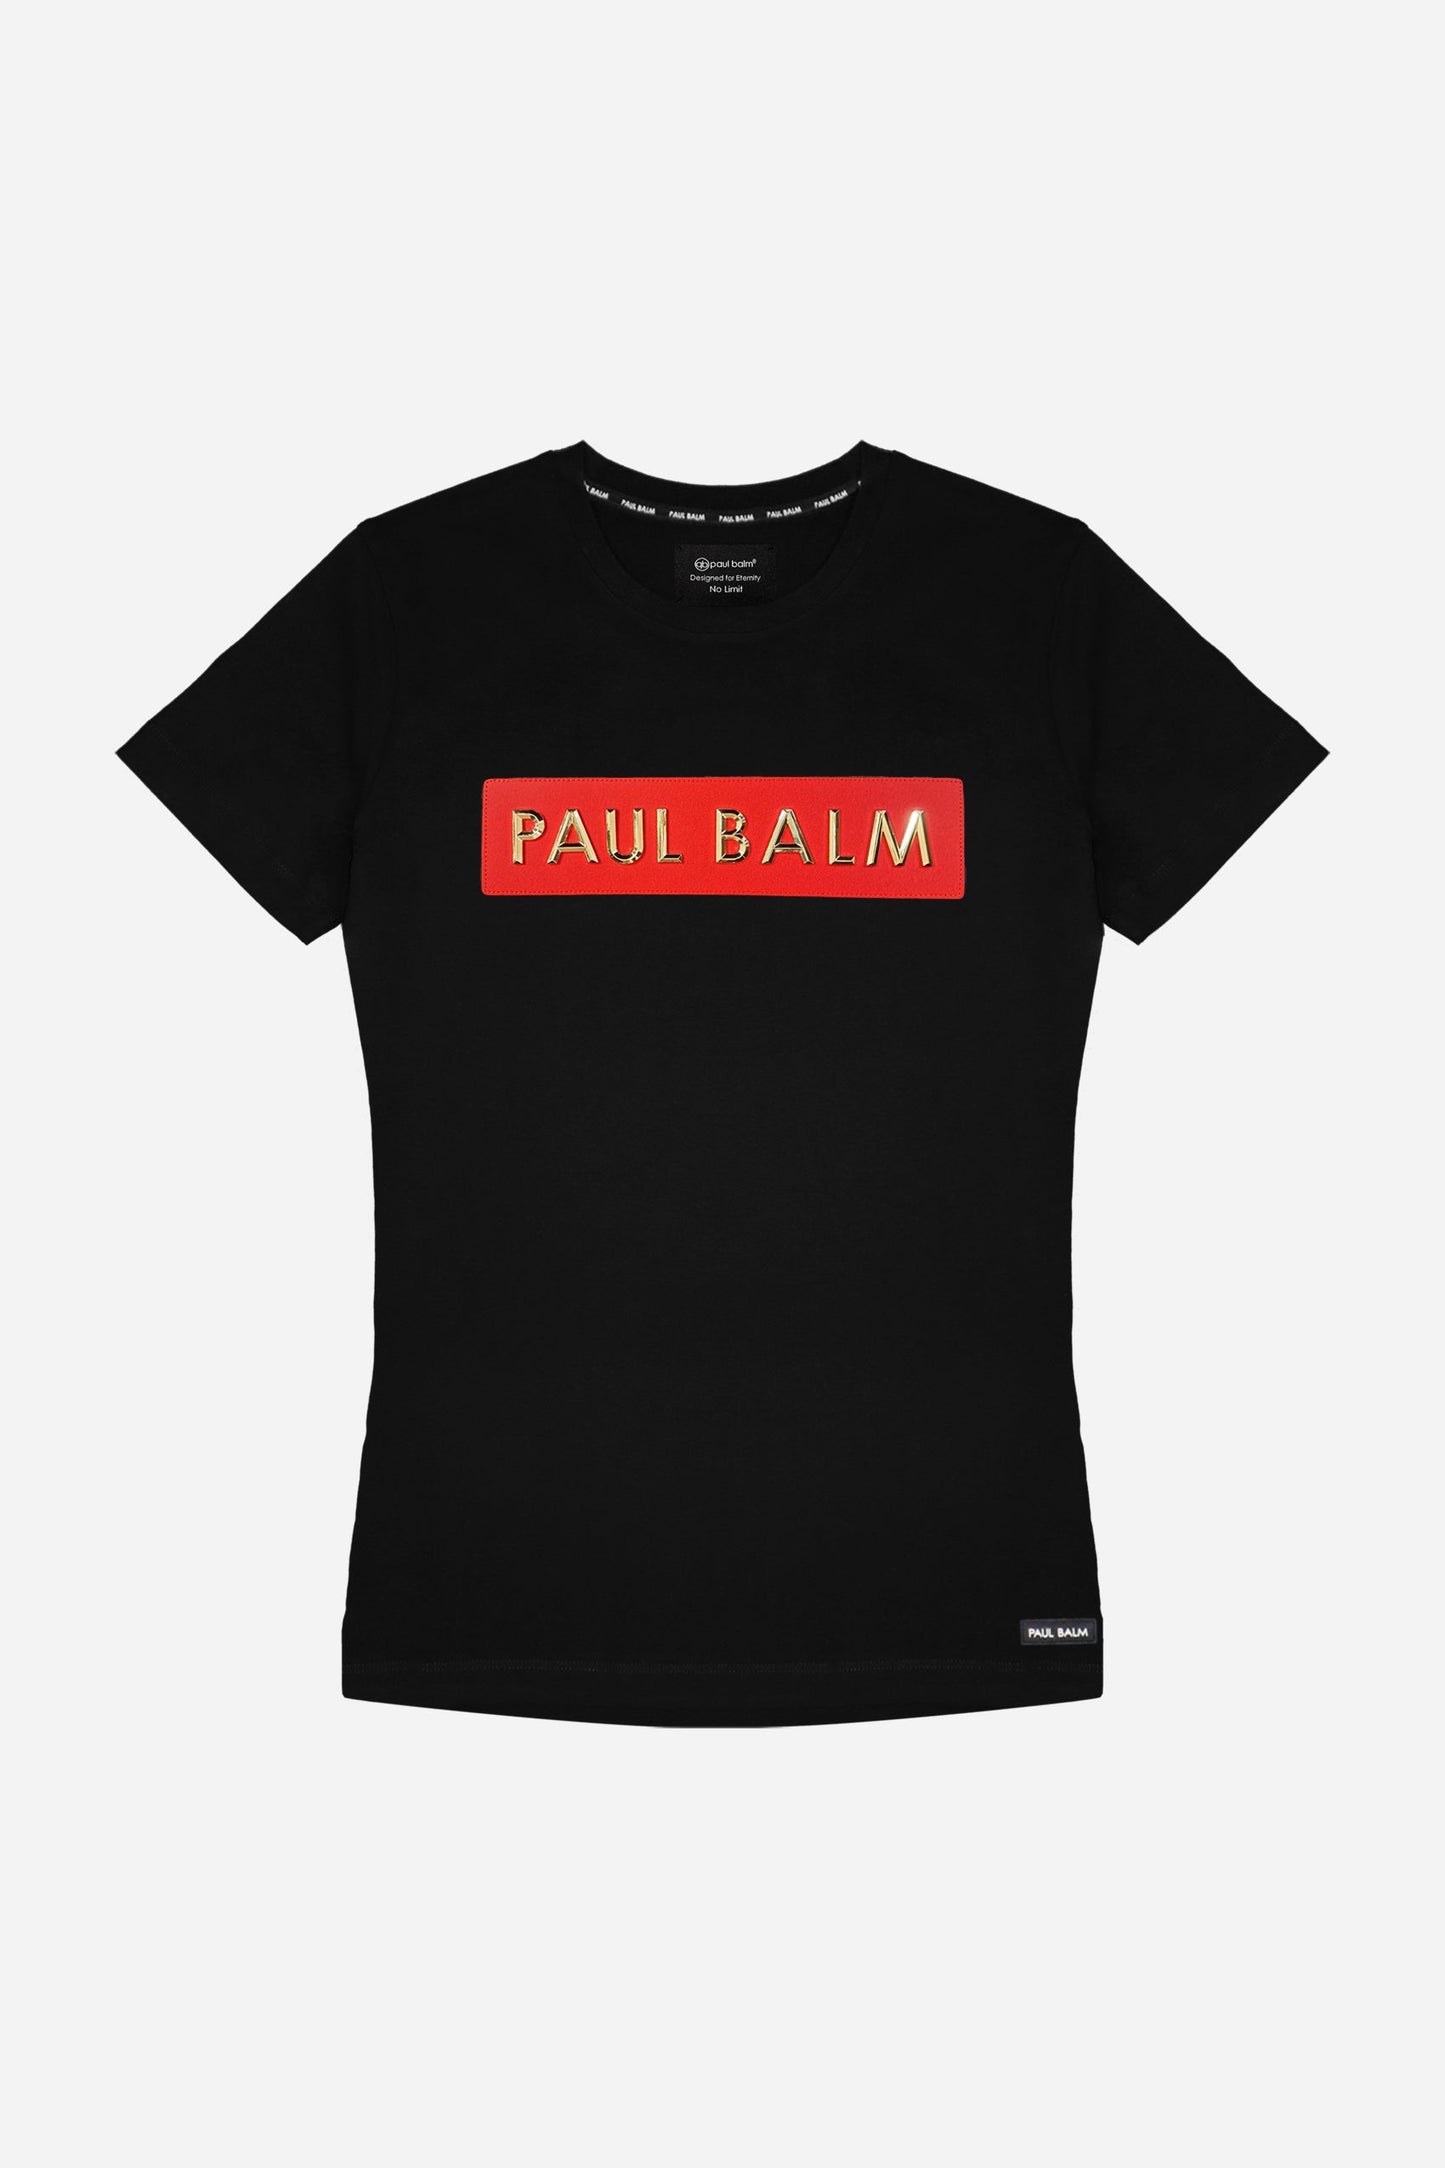 Tshirt PAUL BALM Metall Patch Gold/Rot